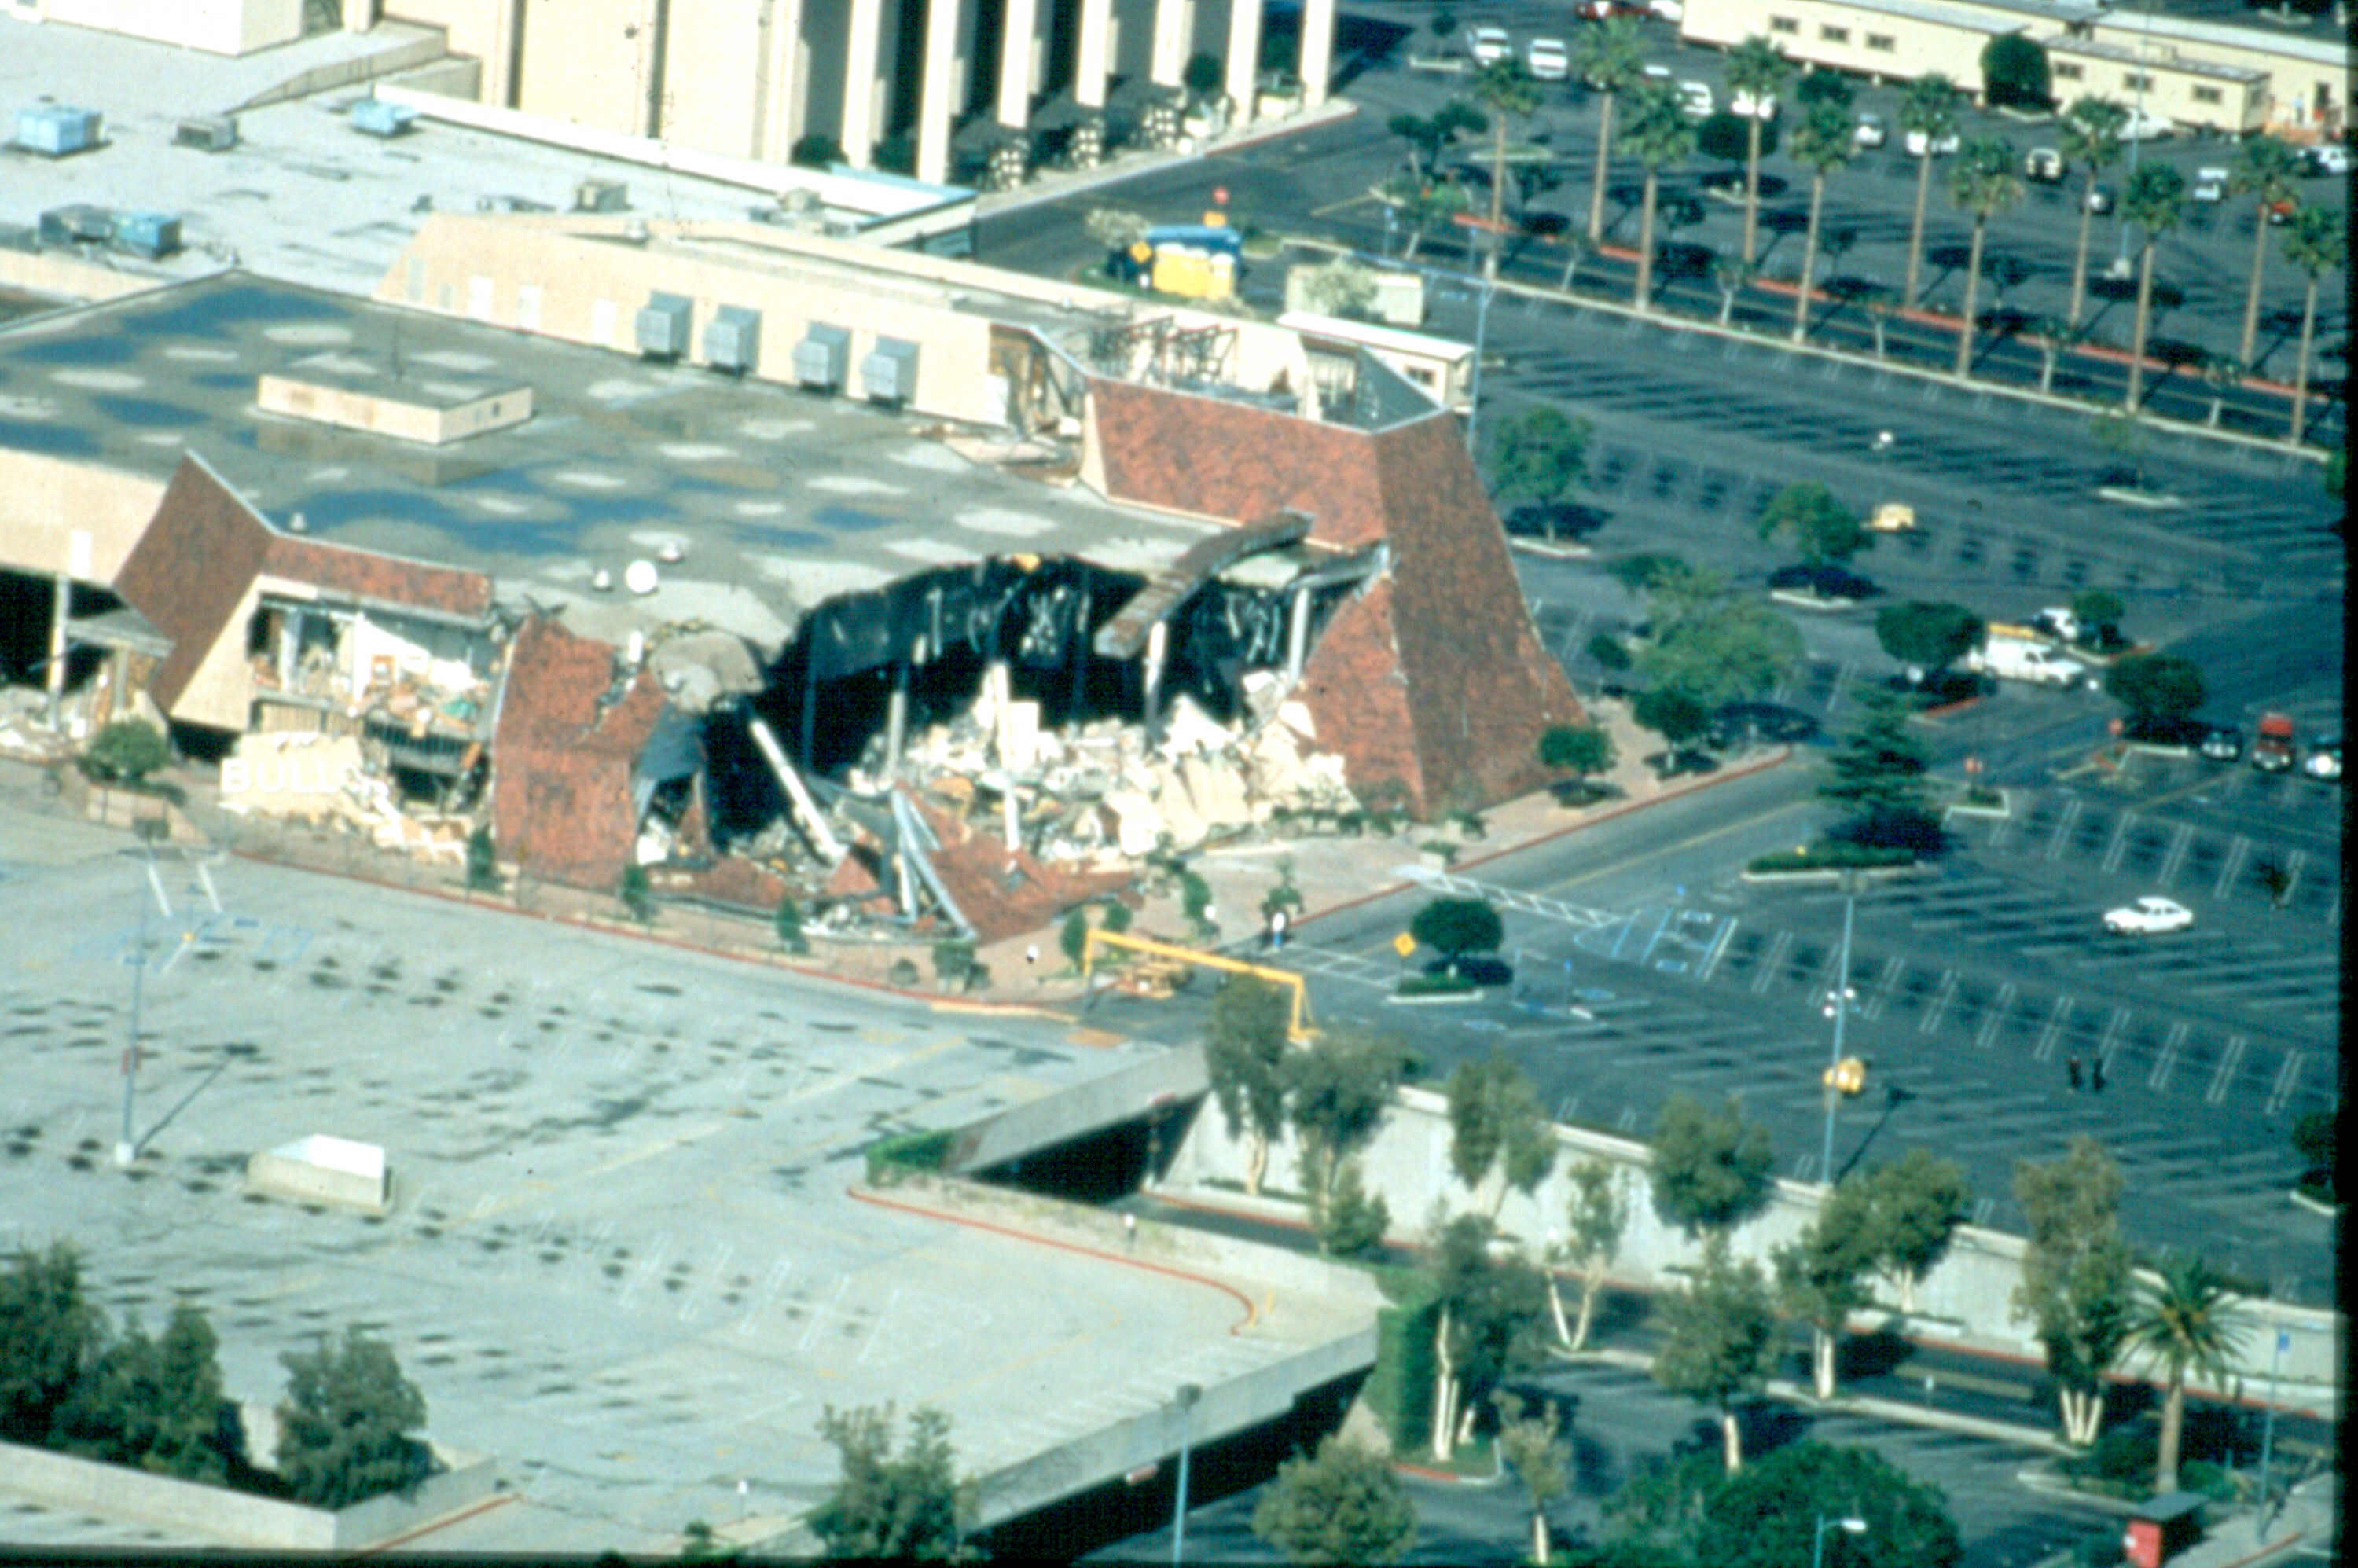 northridge mall earthquake